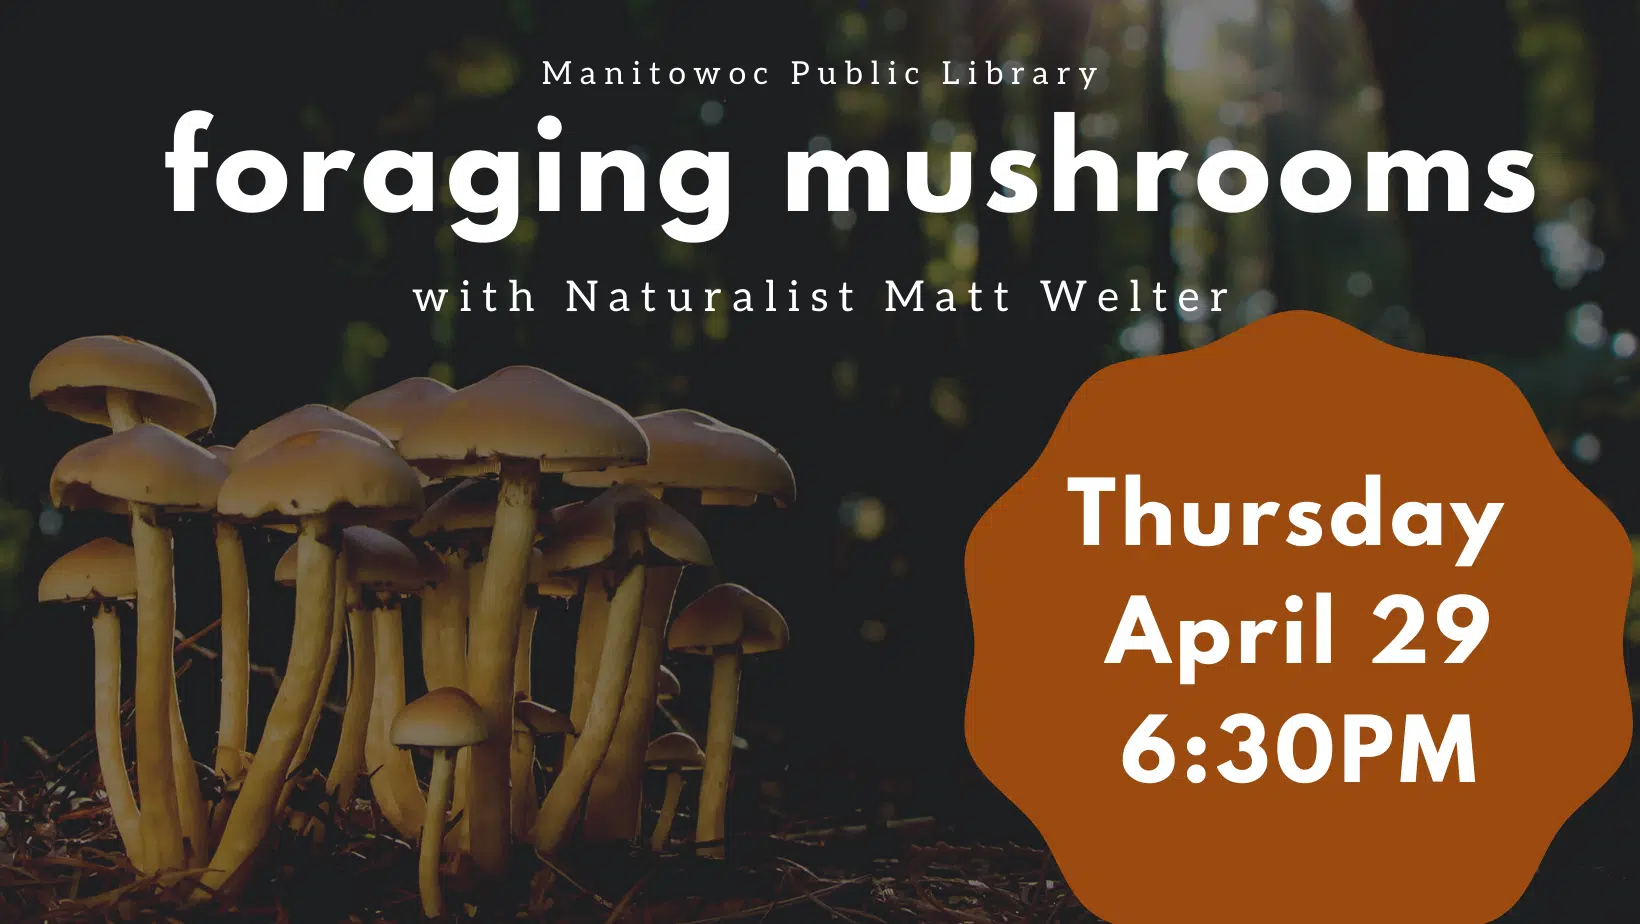 Manitowoc Public Library Hosting Foraging for Mushrooms Program